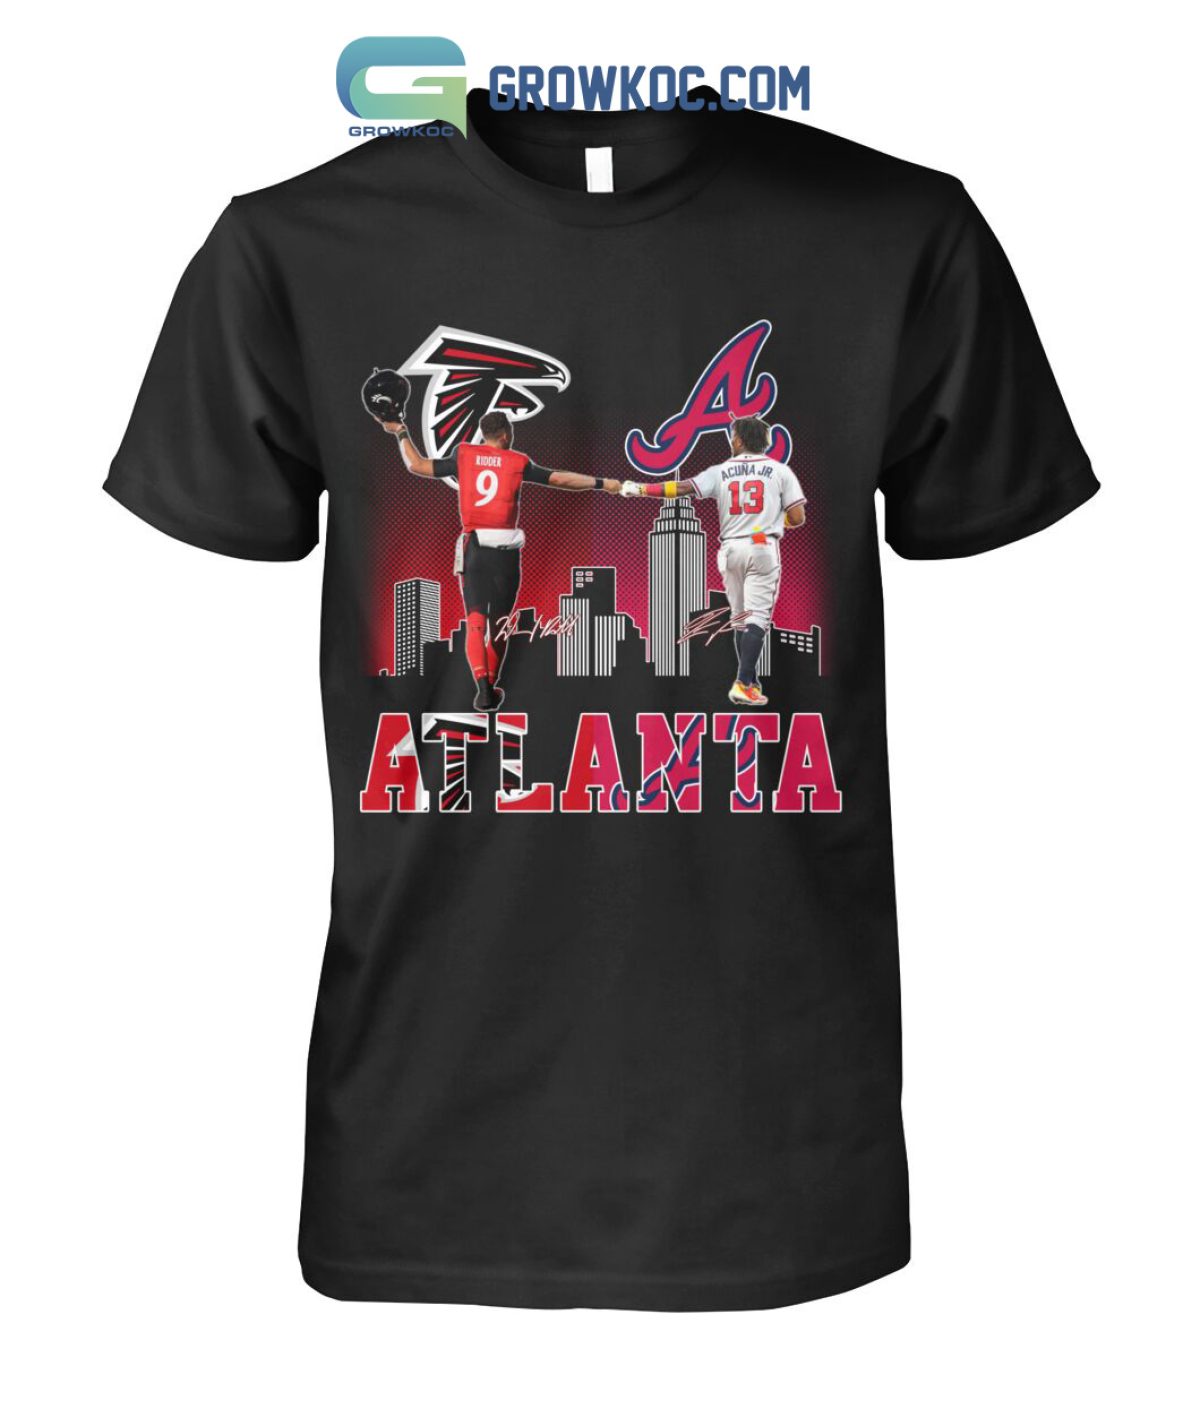 new,, Acuna Jr. Number 13 Atlanta Braves Baseball Jersey// jersey shirt 3d,  red